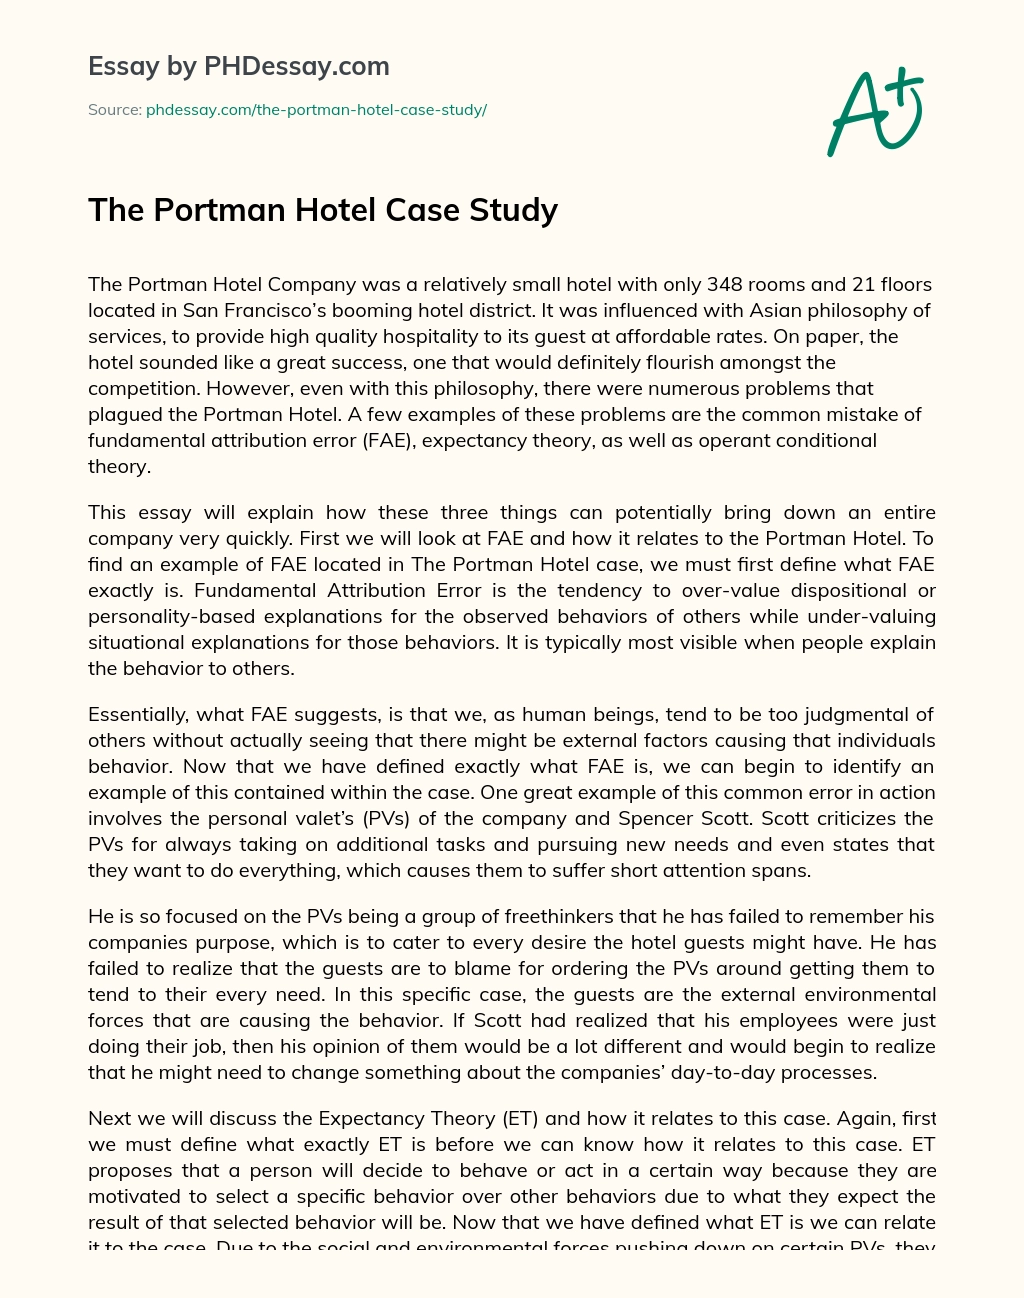 The Portman Hotel Case Study essay